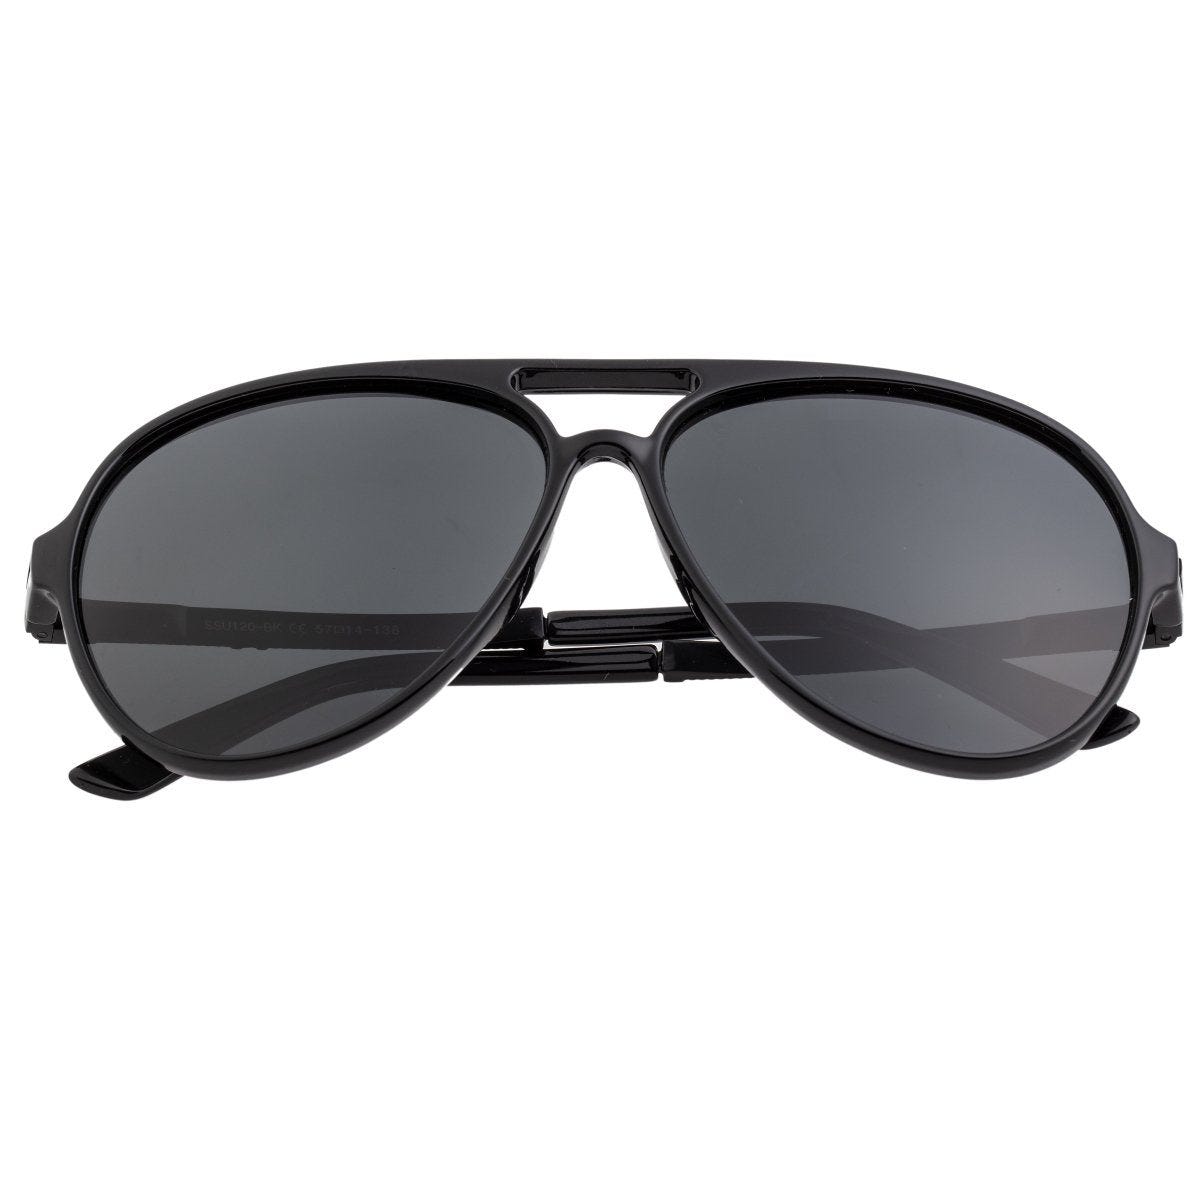 Black polarized sunglasses with a classic aviator design, featuring dark lenses and a double bridge.